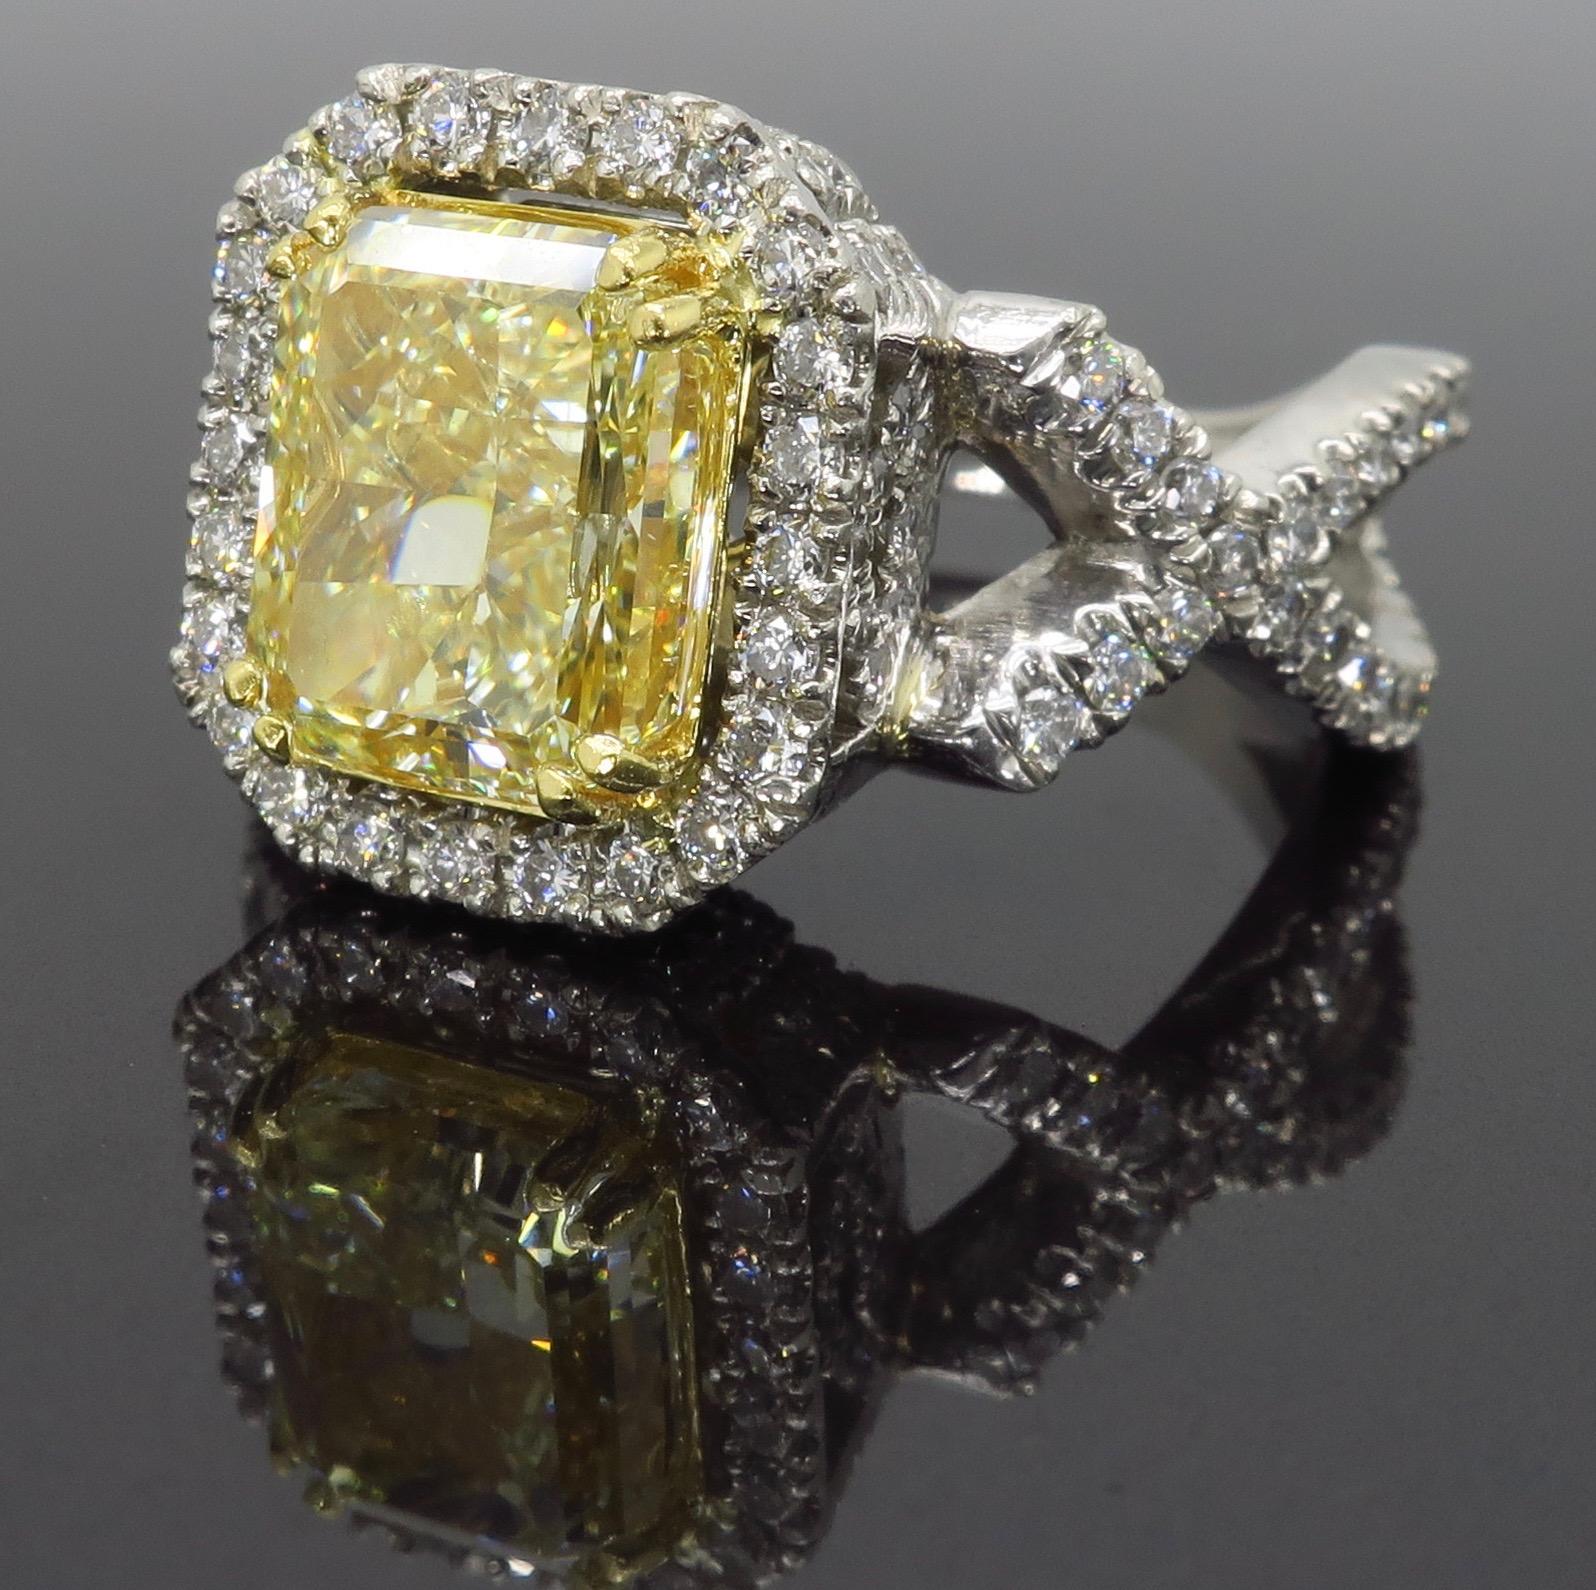 4.83 carat yellow diamond